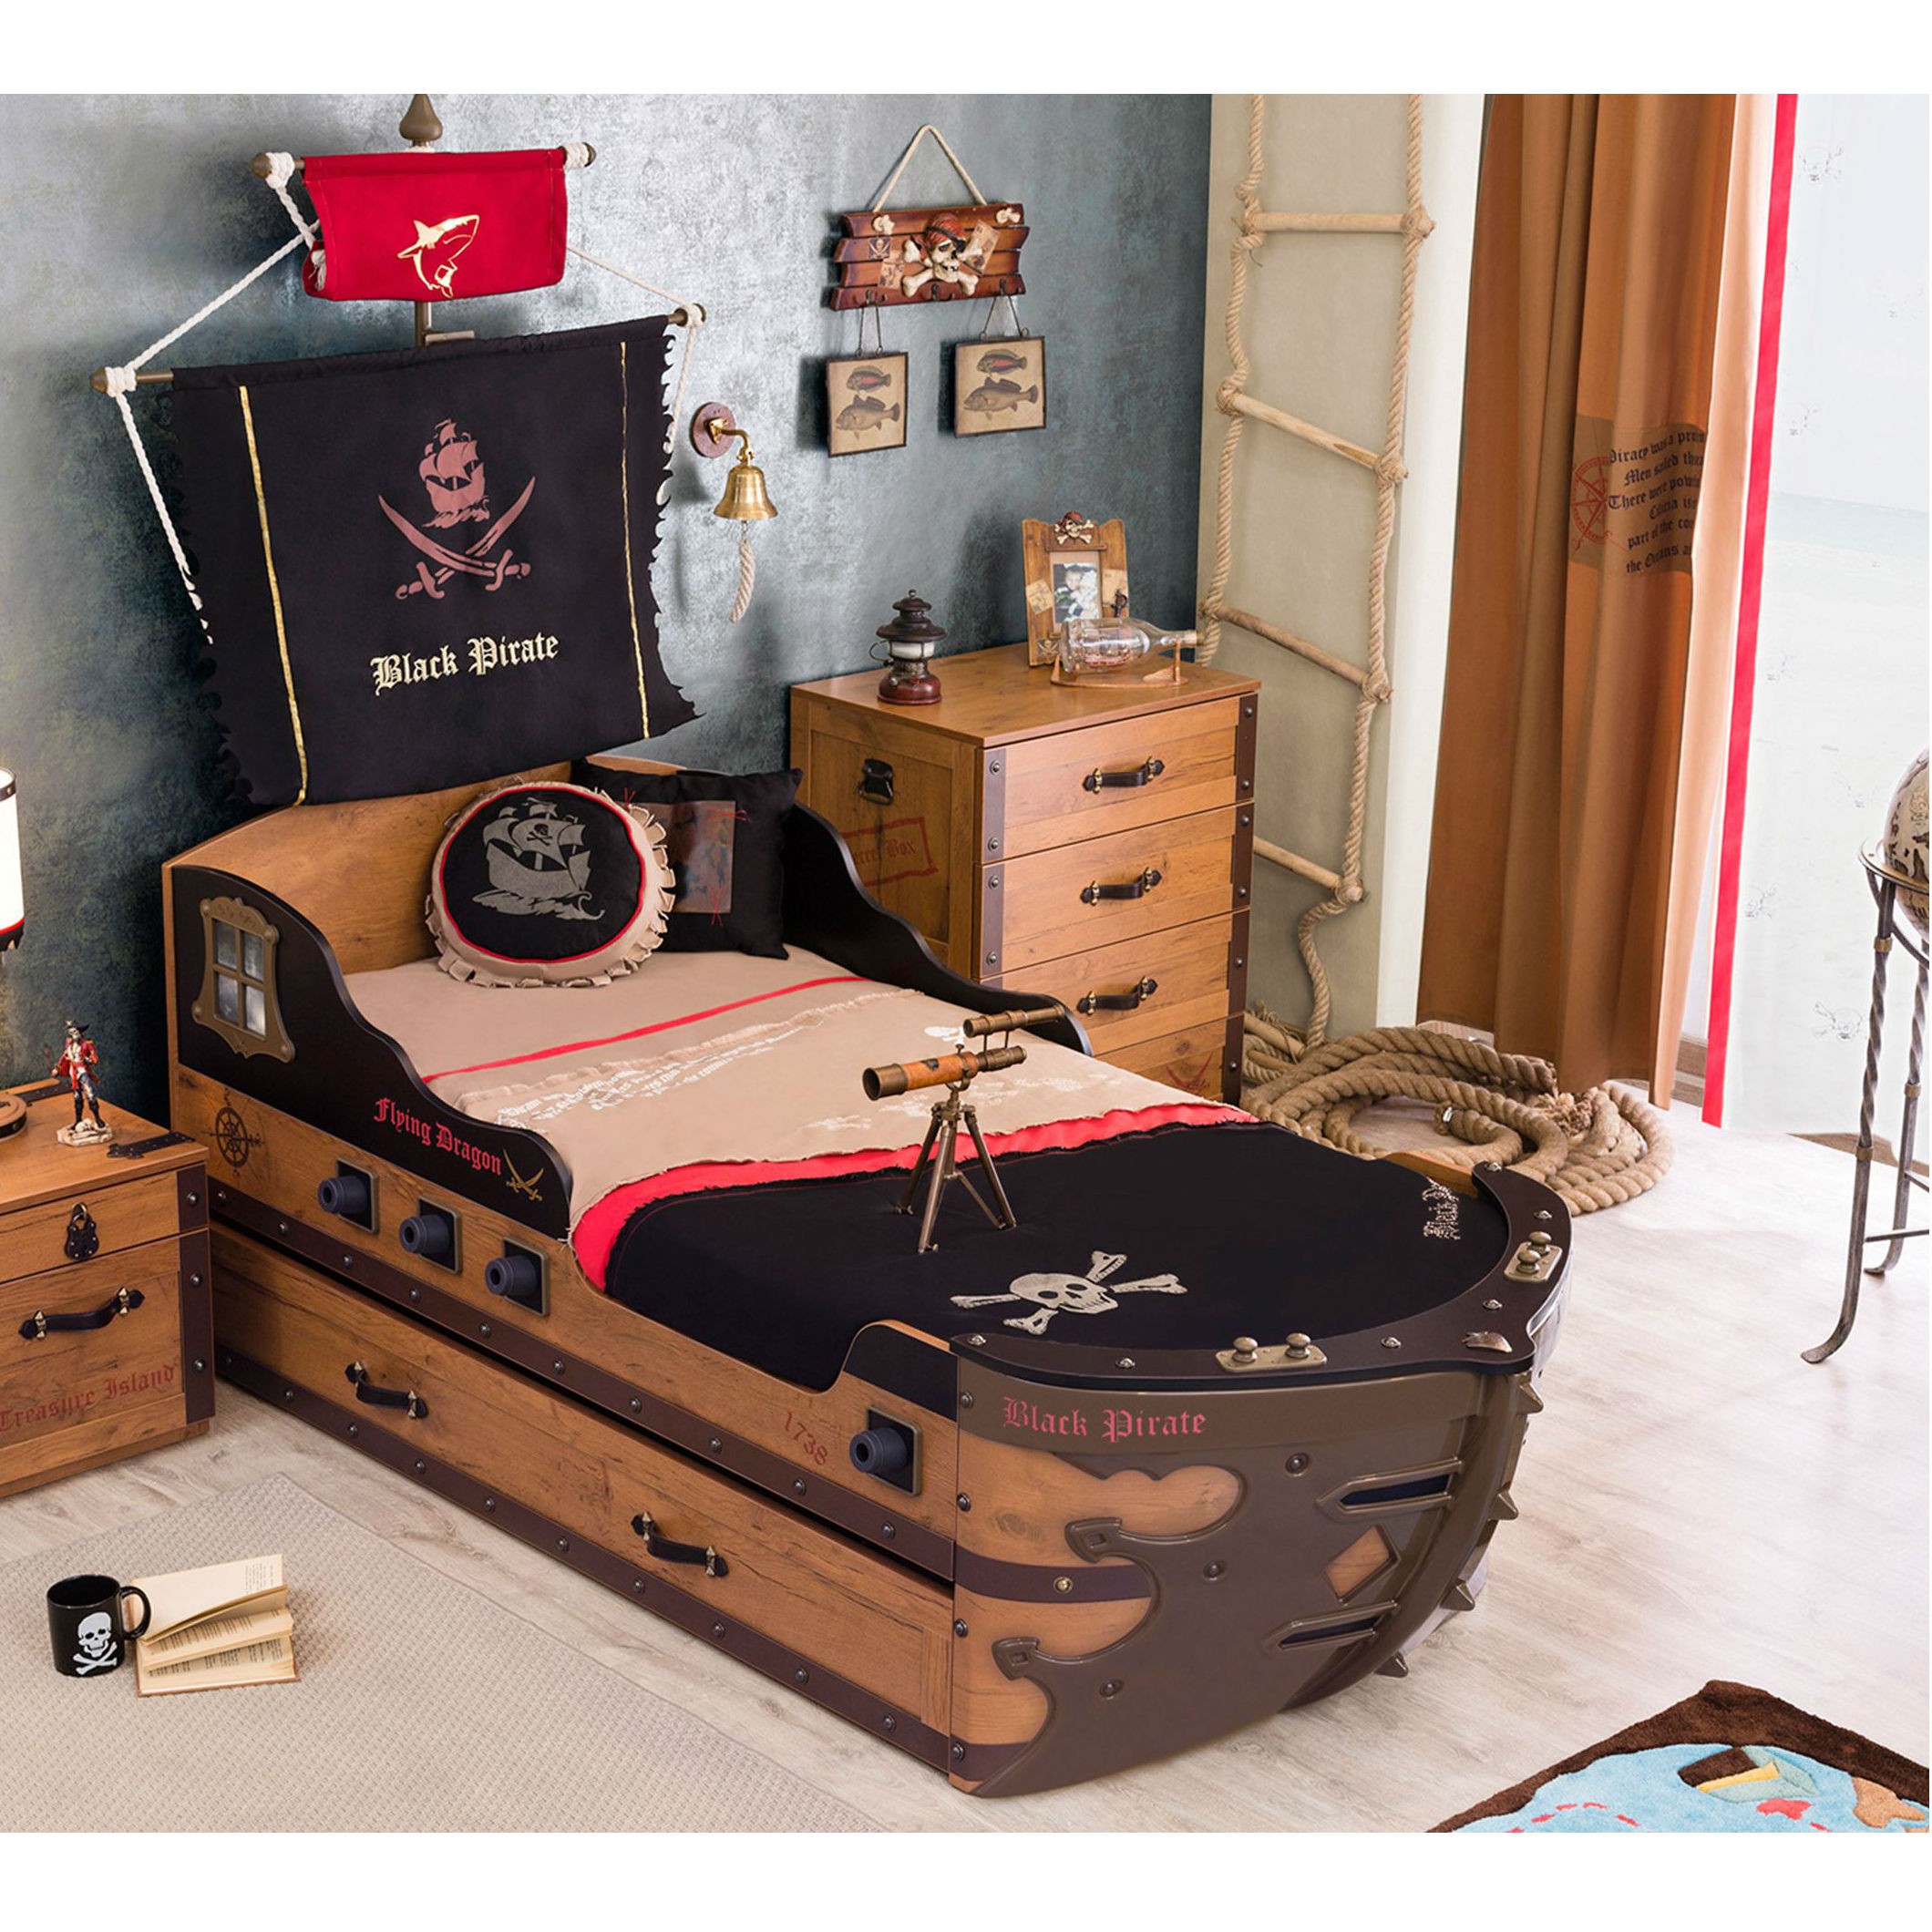 Children's bed - ship